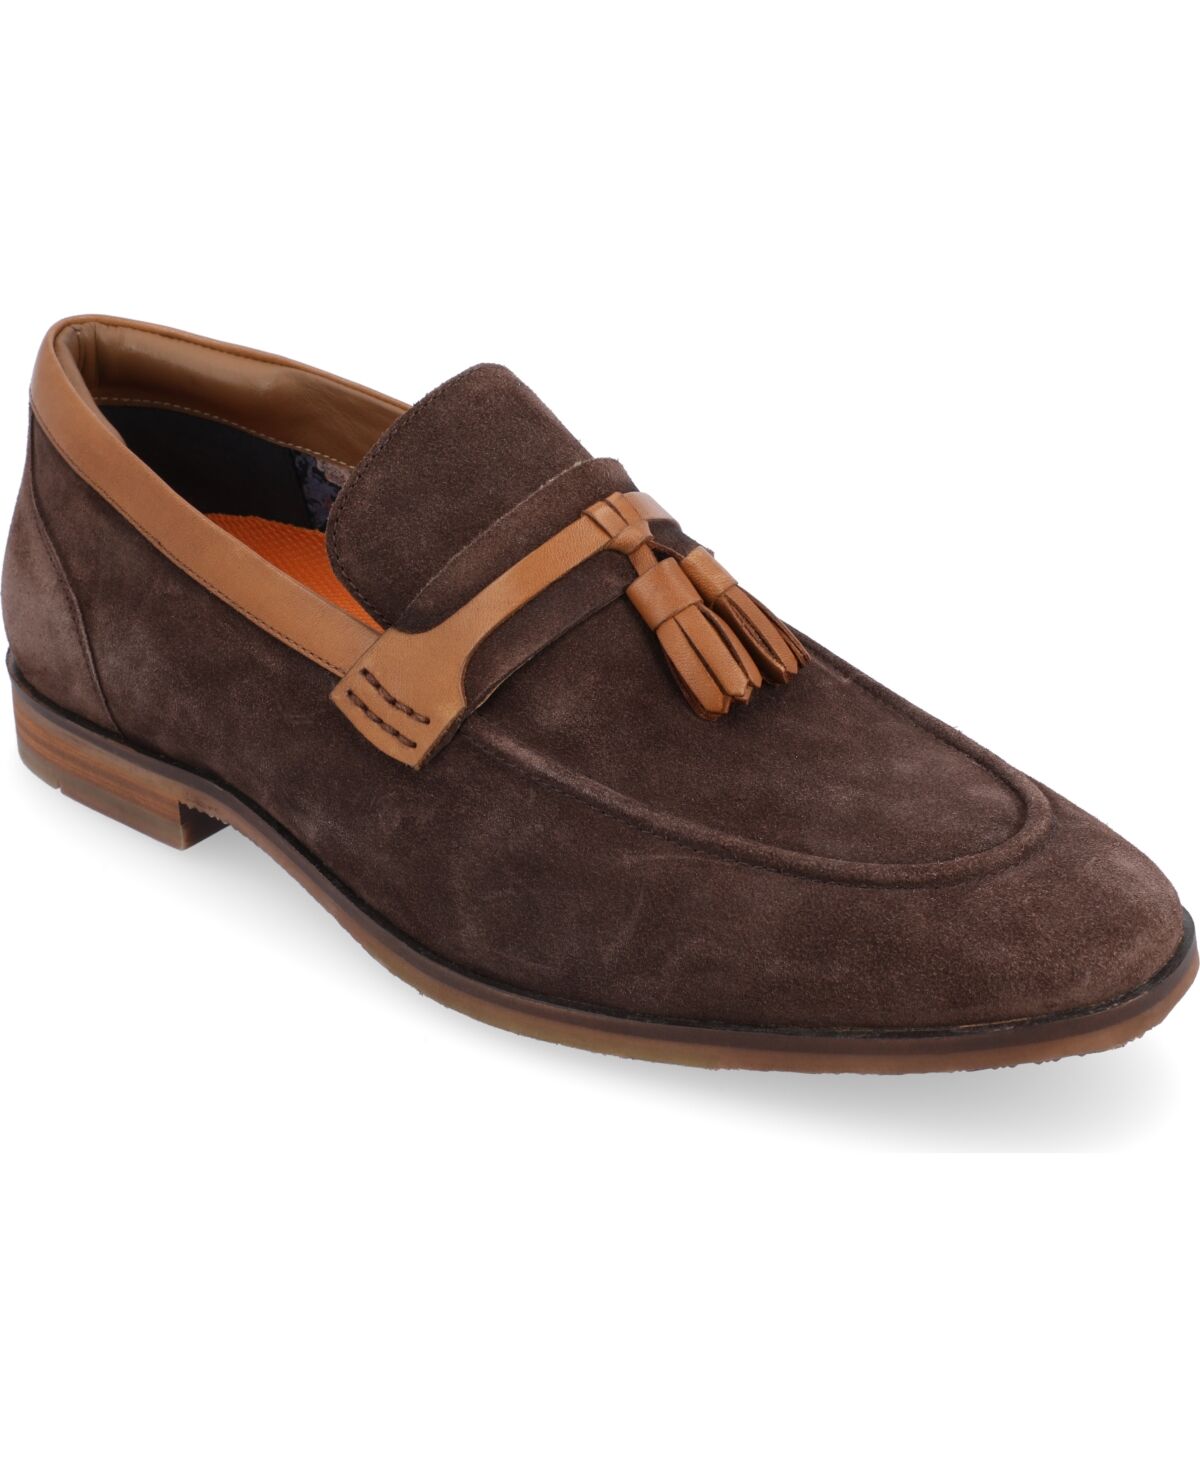 Thomas & Vine Men's Hawthorn Apron Toe Tassel Loafer Dress Shoes - Brown